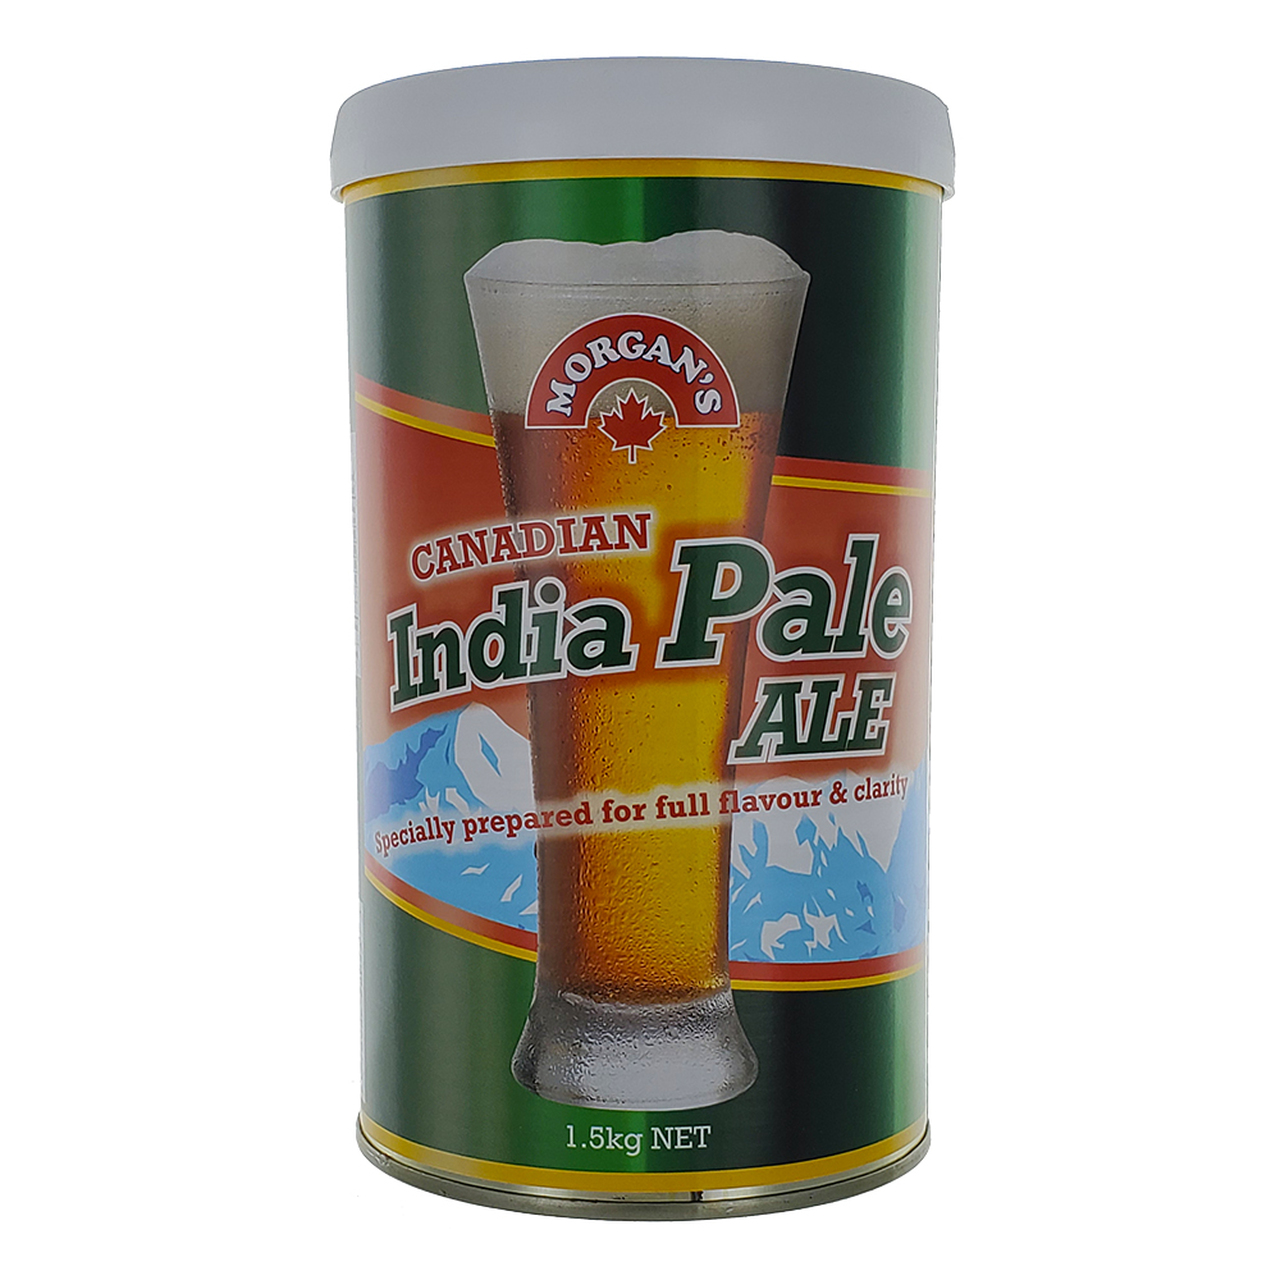 Morgan's Canadian India Pale Ale